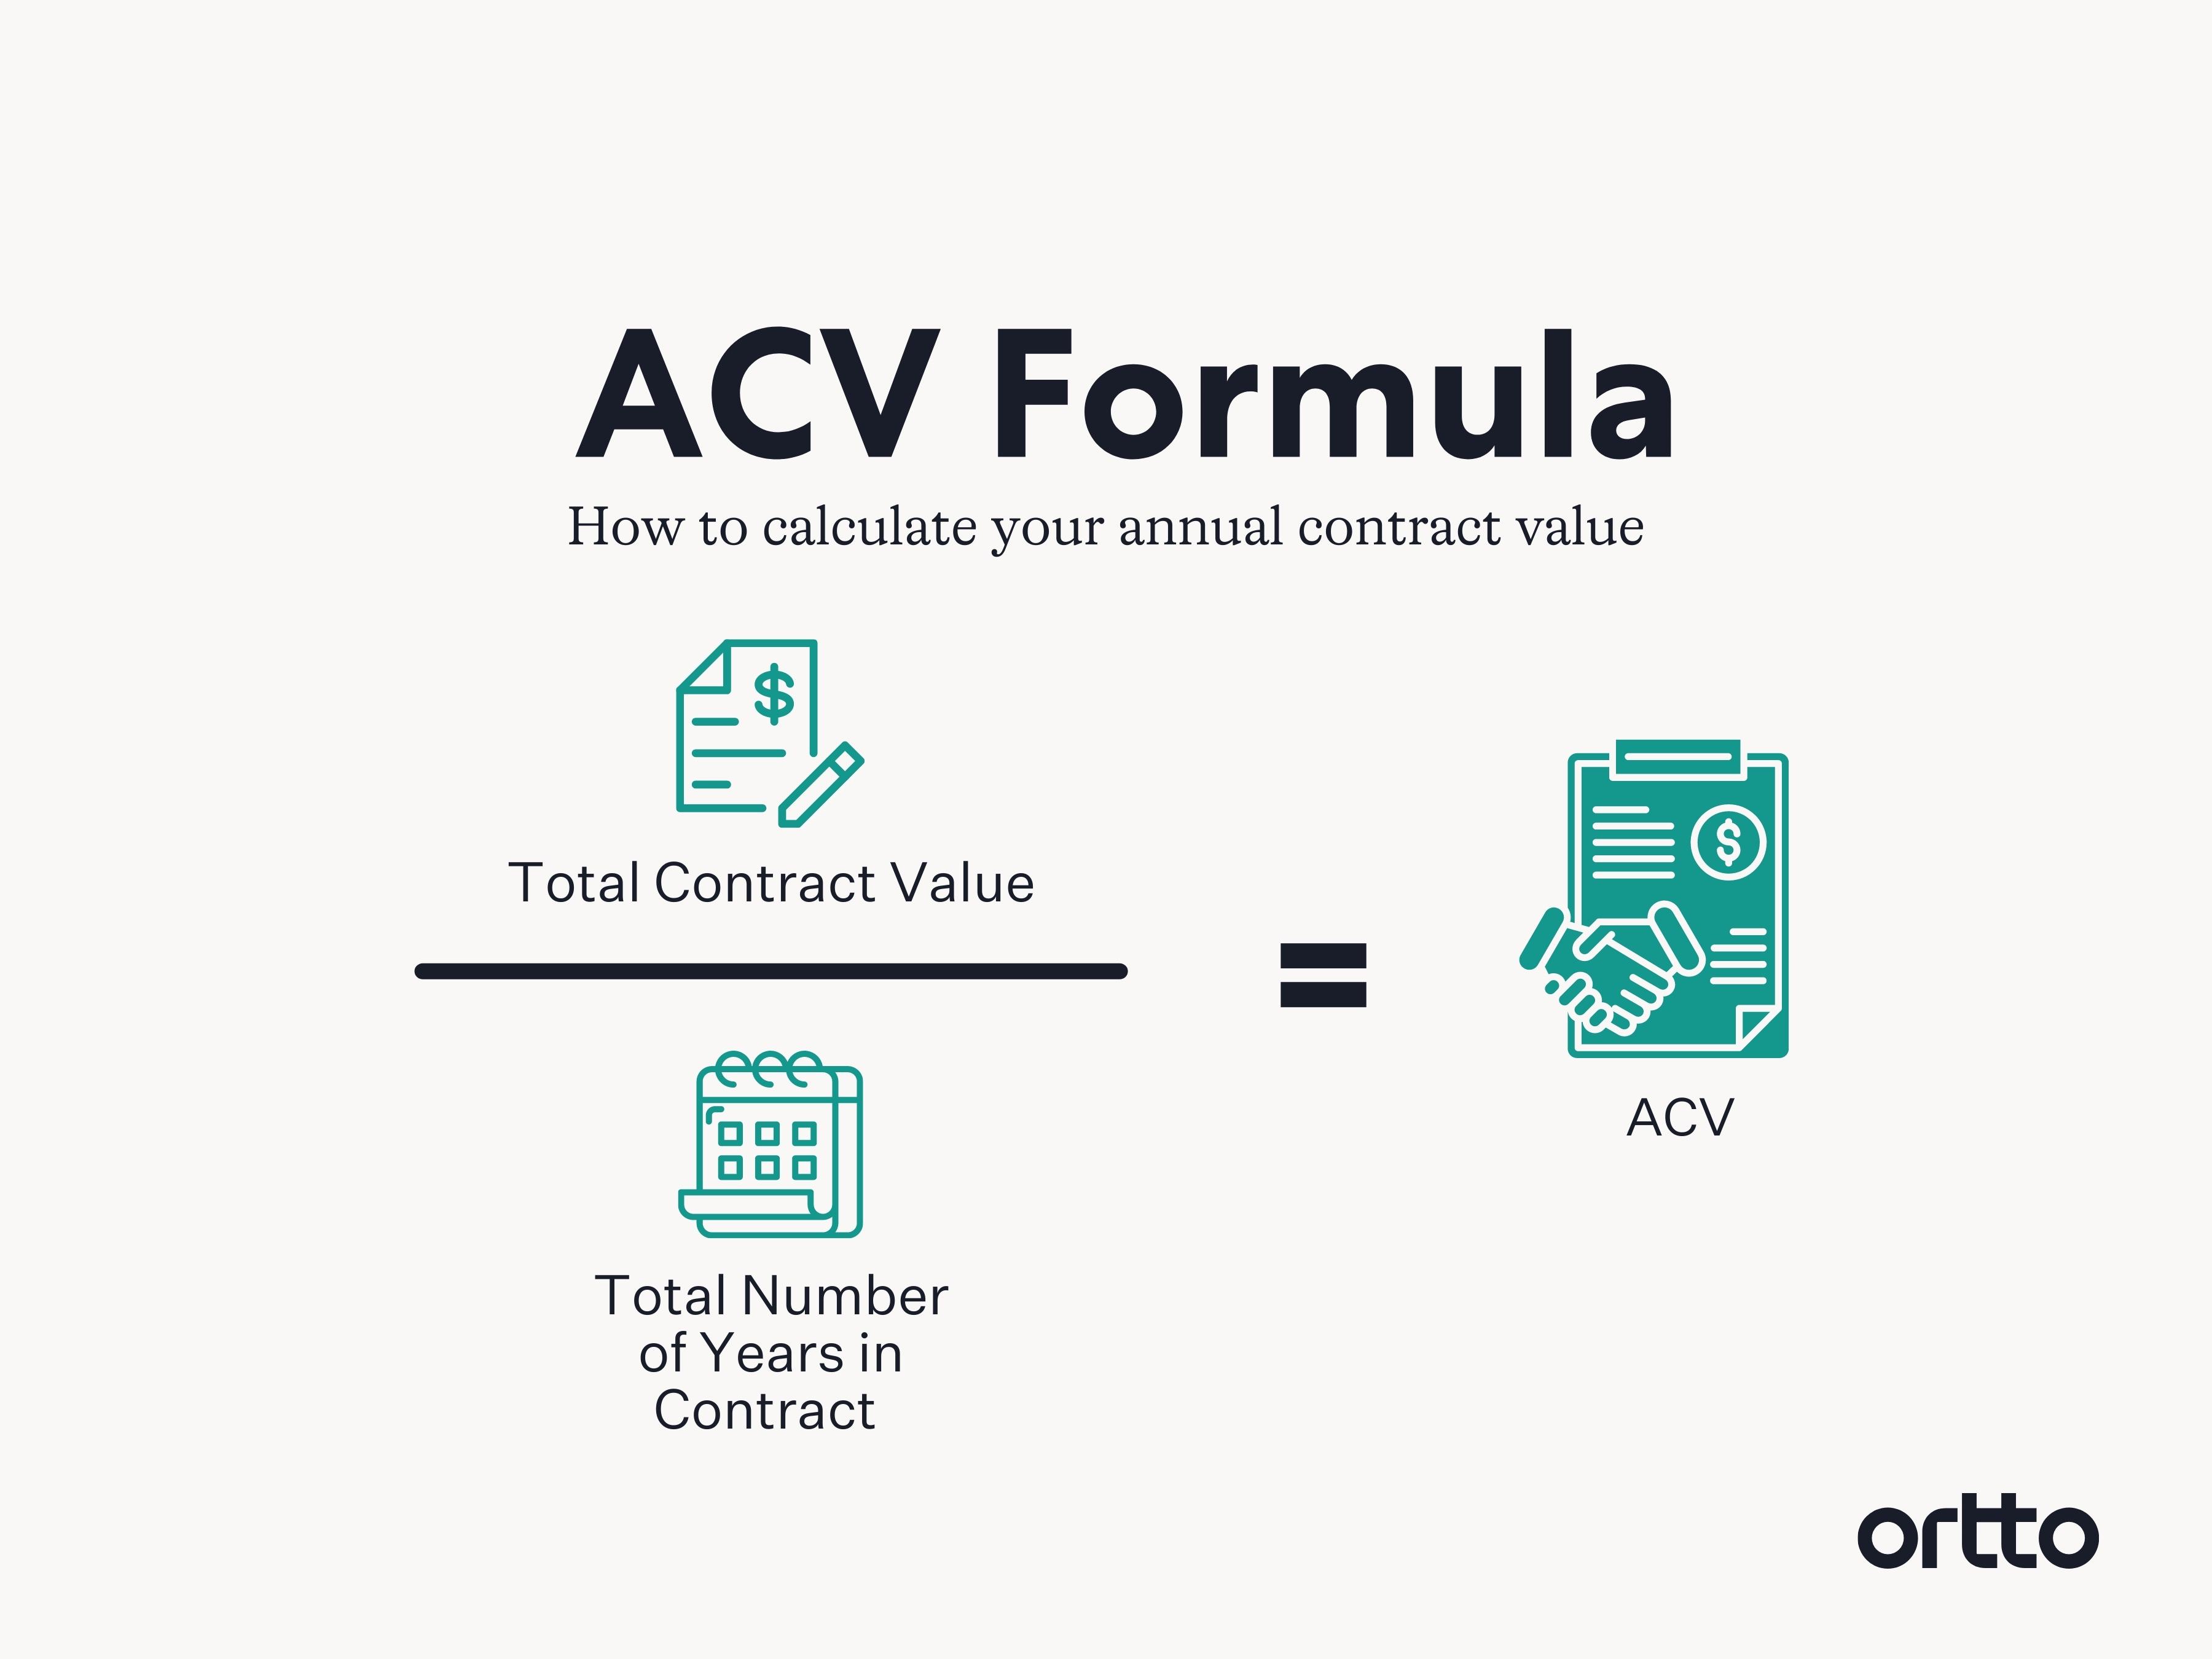 Annual Contract Value Formula